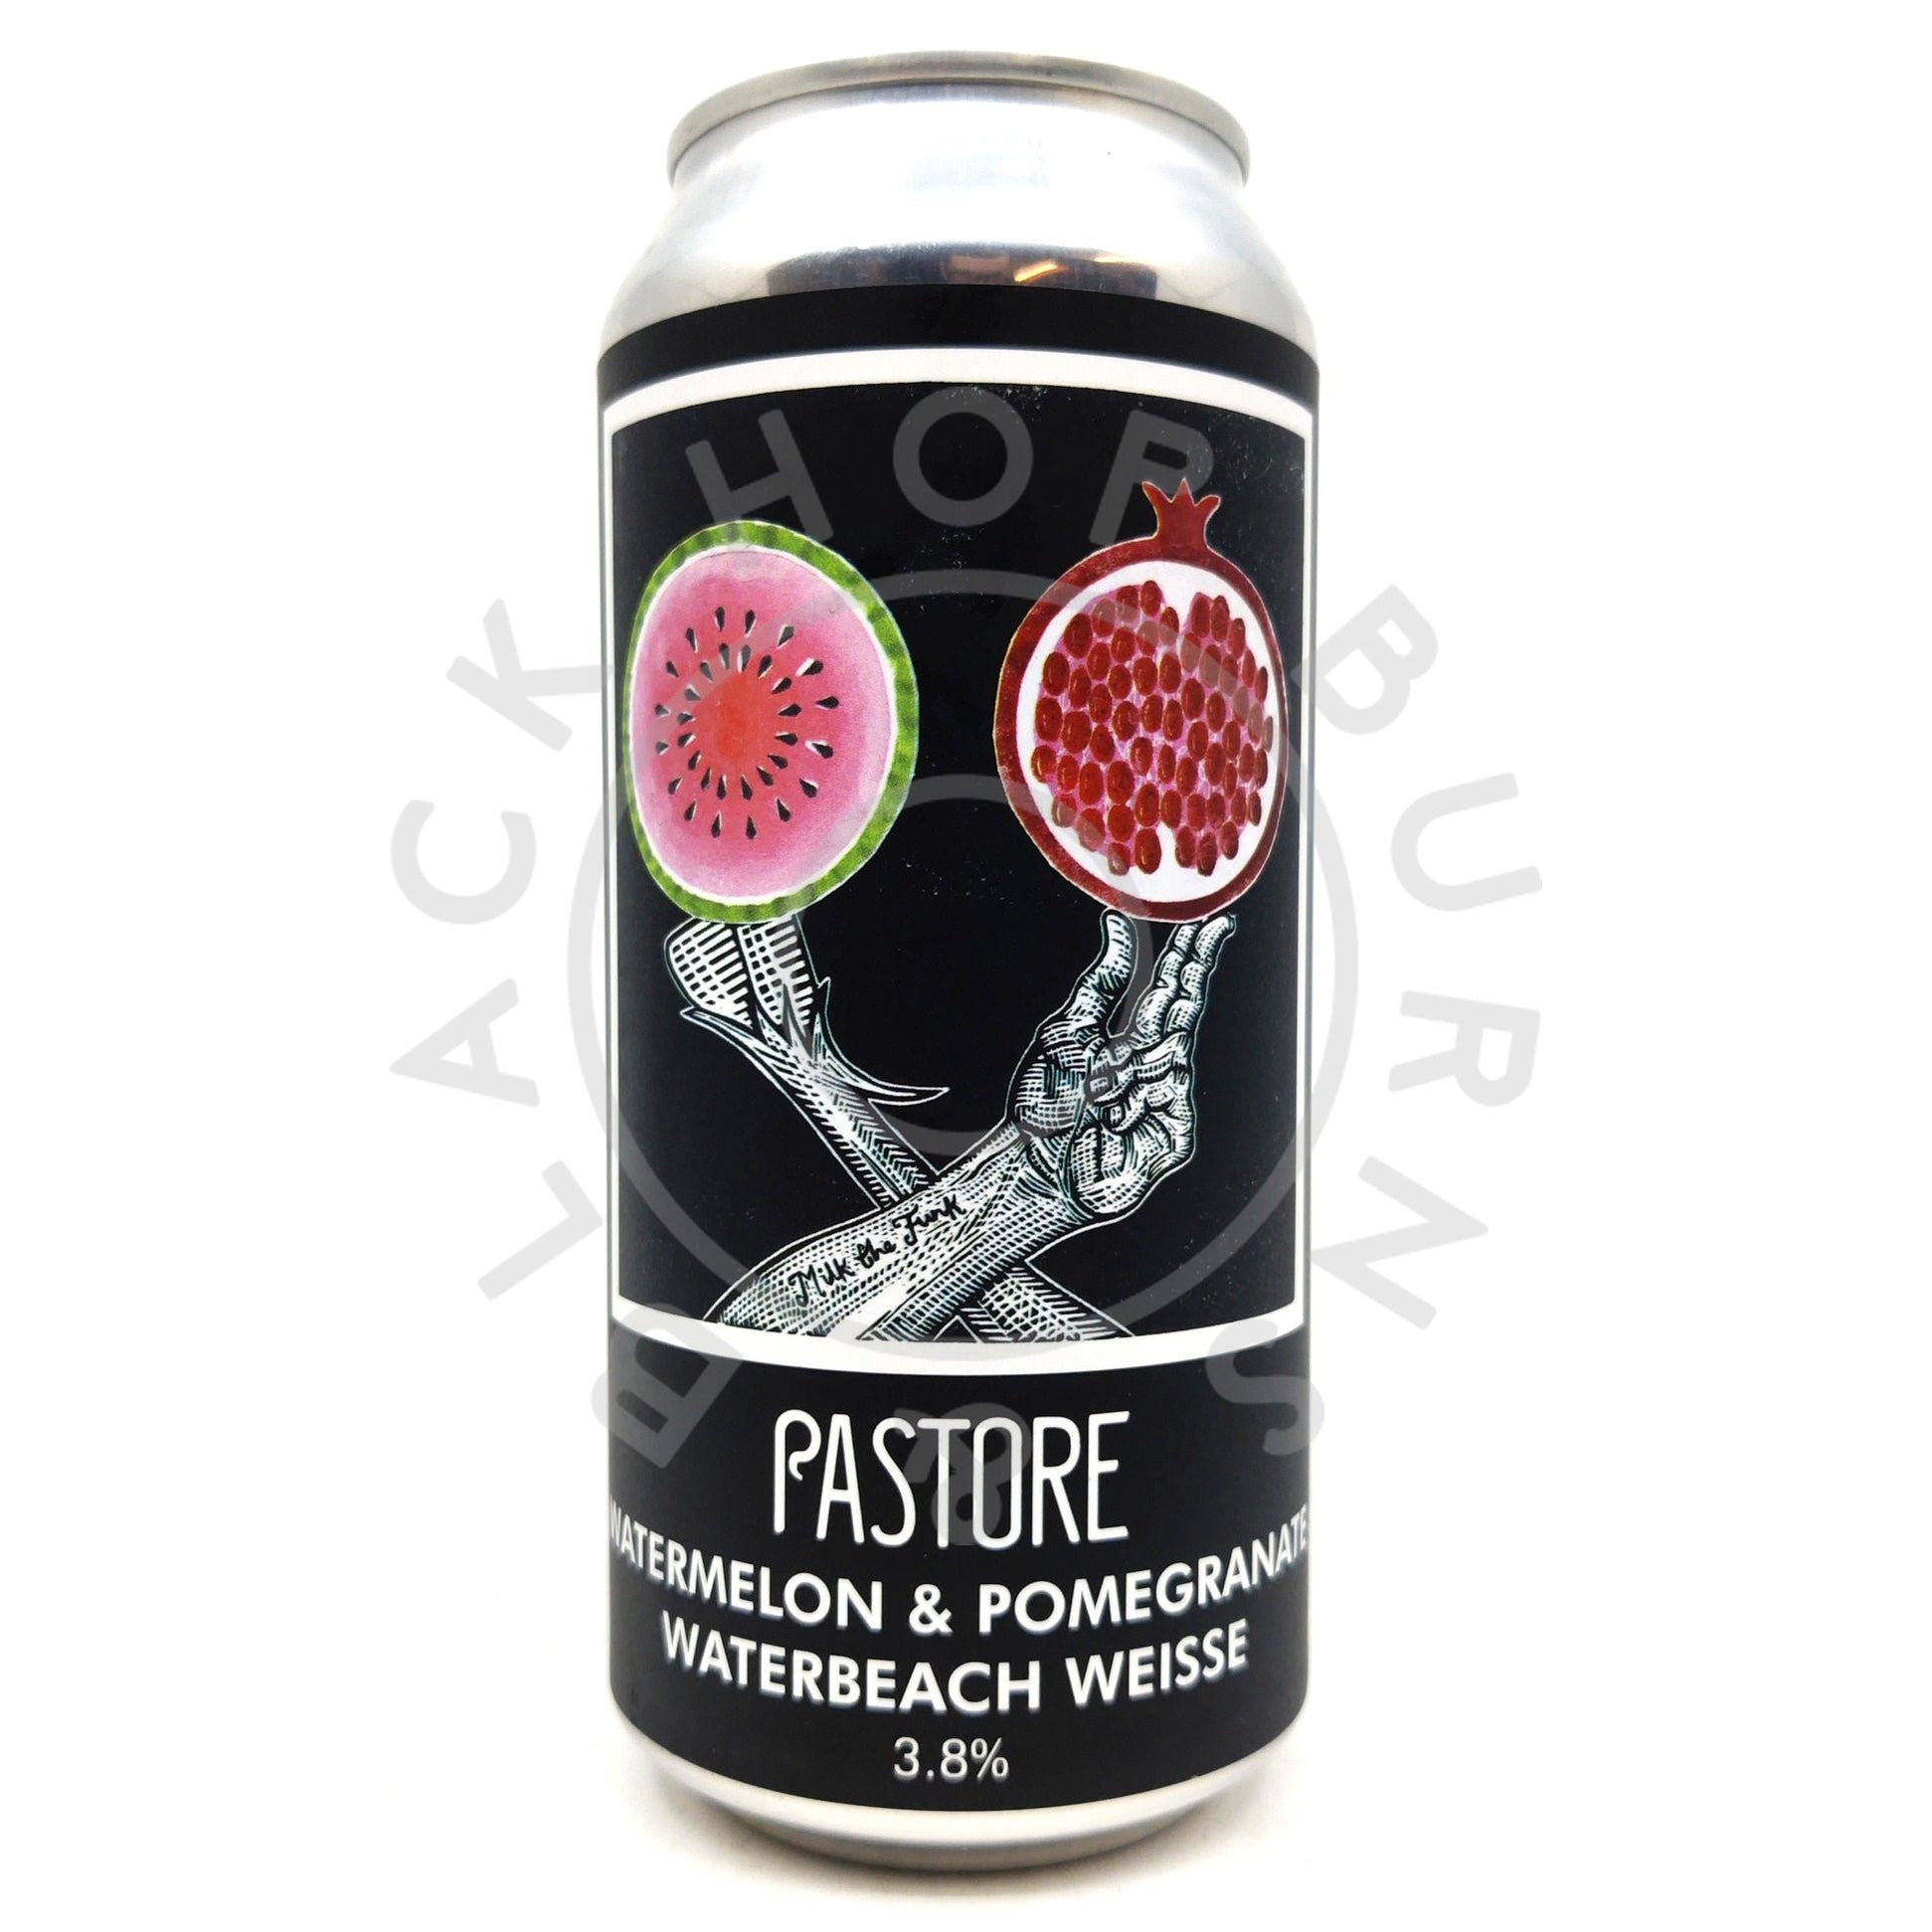 Pastore Waterbeach Weisse Watermelon & Pomegranate 3.7% (440ml can)-Hop Burns & Black